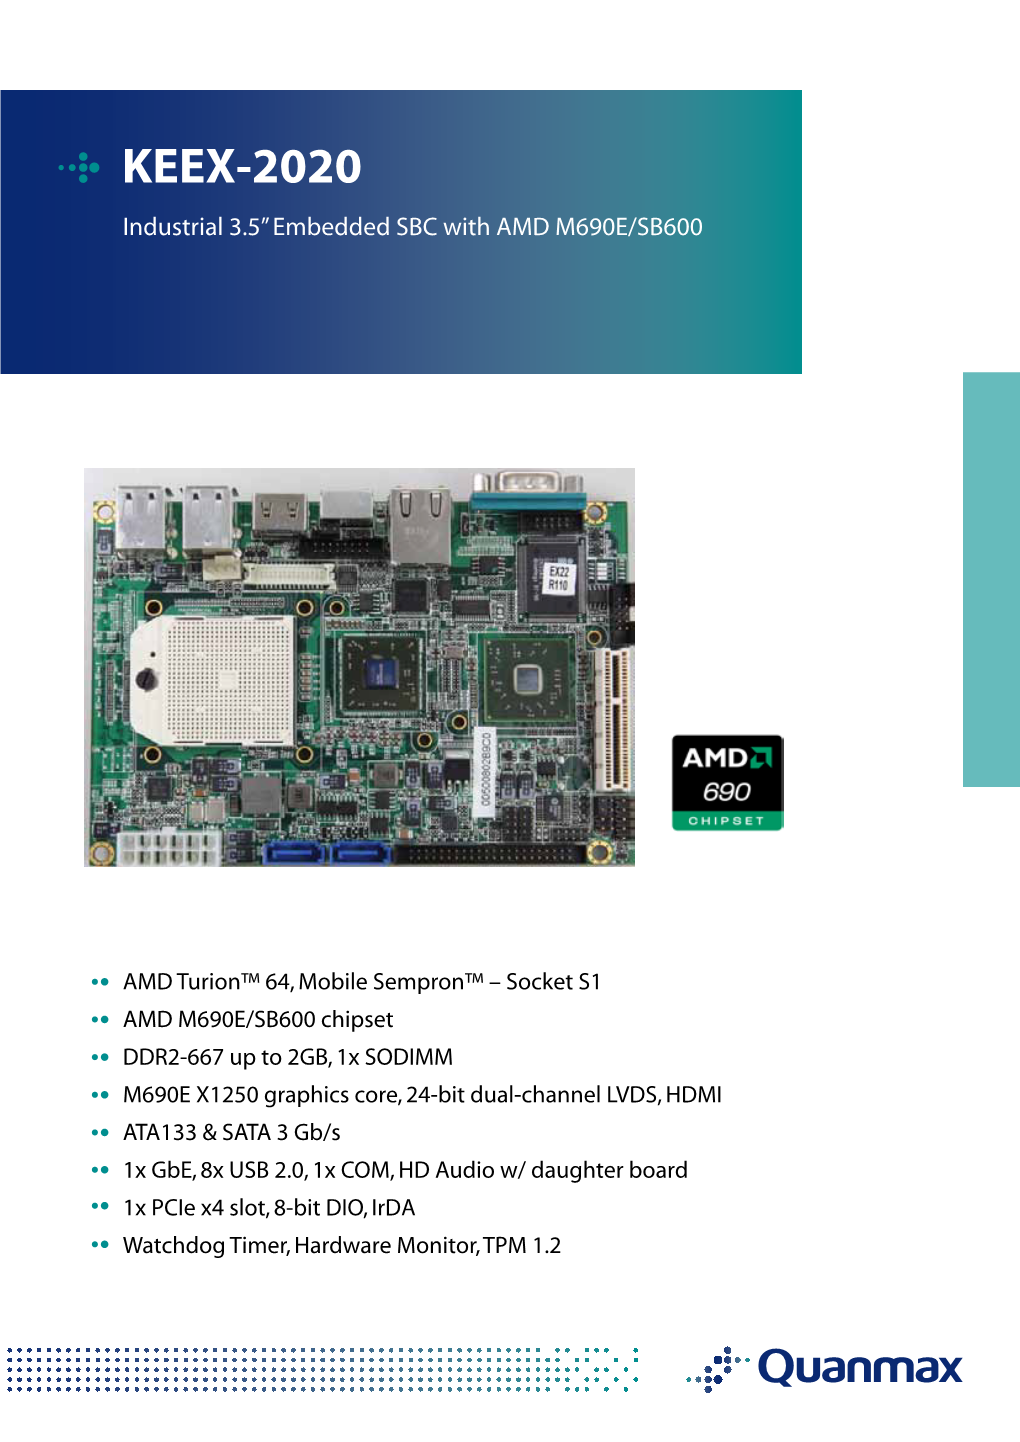 KEEX-2020 Industrial 3.5” Embedded SBC with AMD M690E/SB600